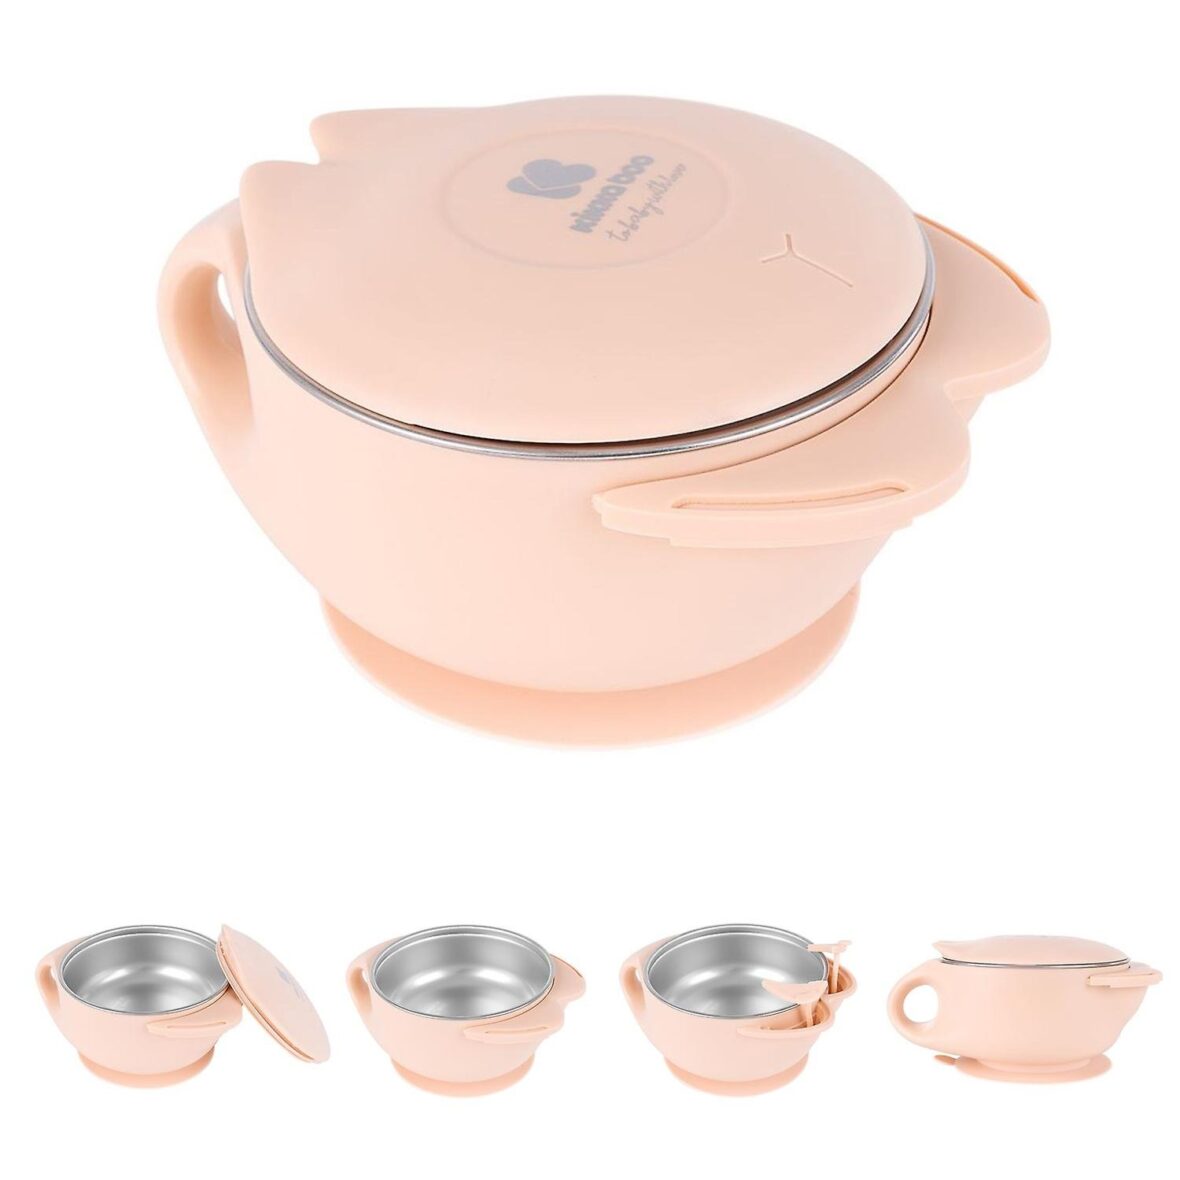 warm-bowl-stainless-steel-400ml-cat-pink.jpg